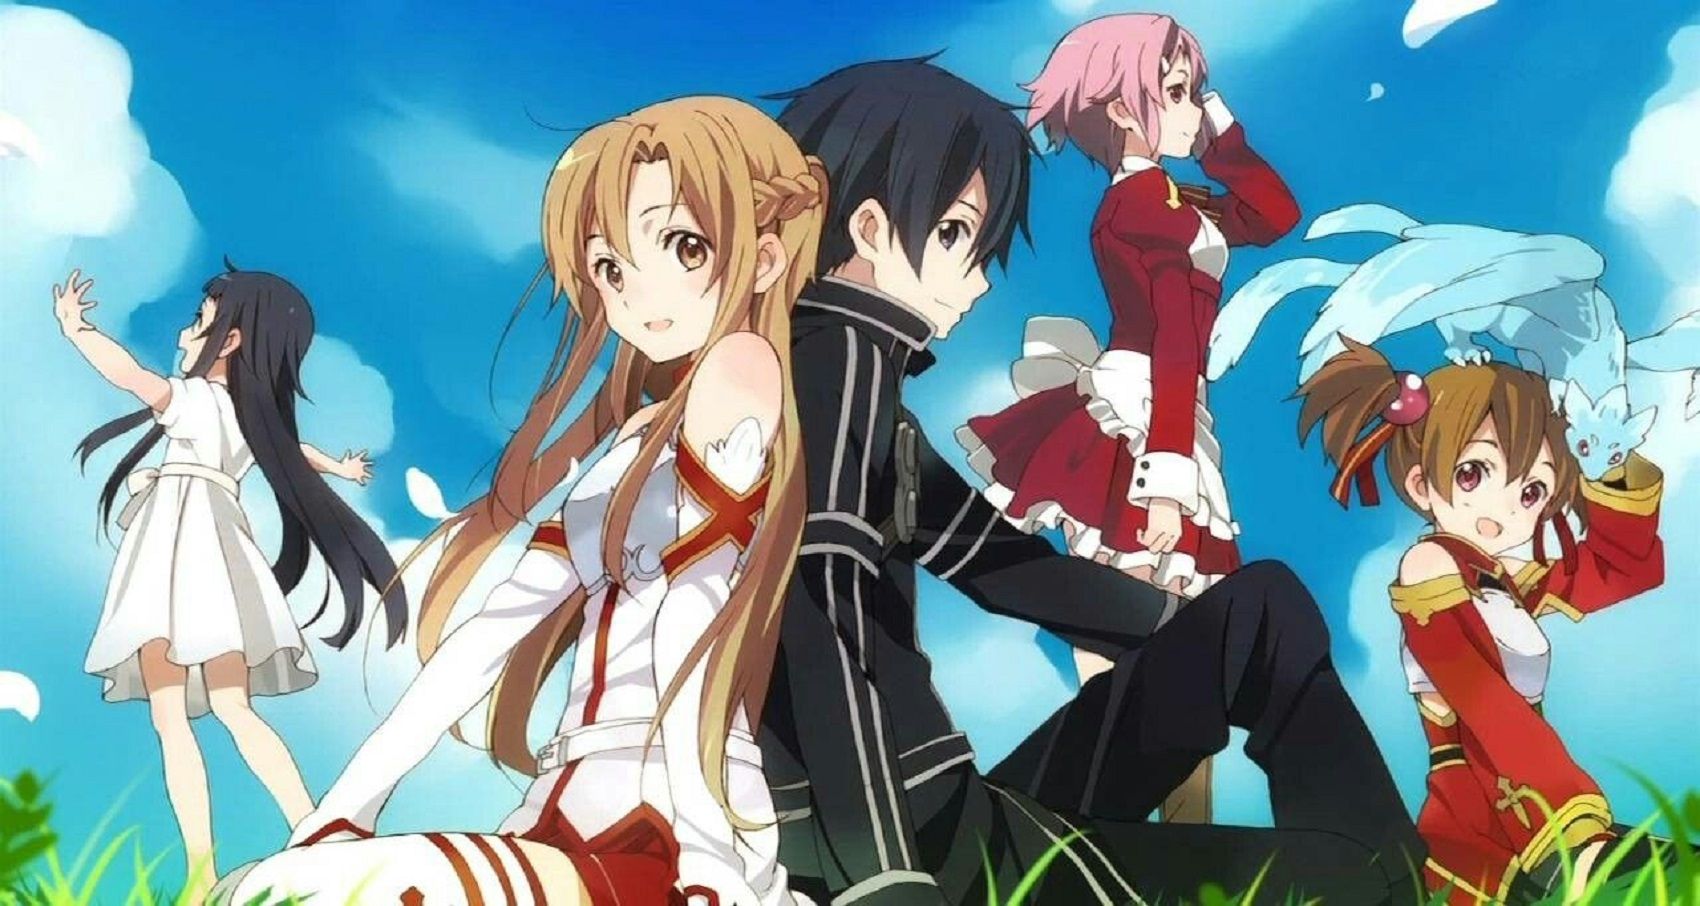 Anime Review- Sword Art Online (Aincard Arc) - Blerds Online